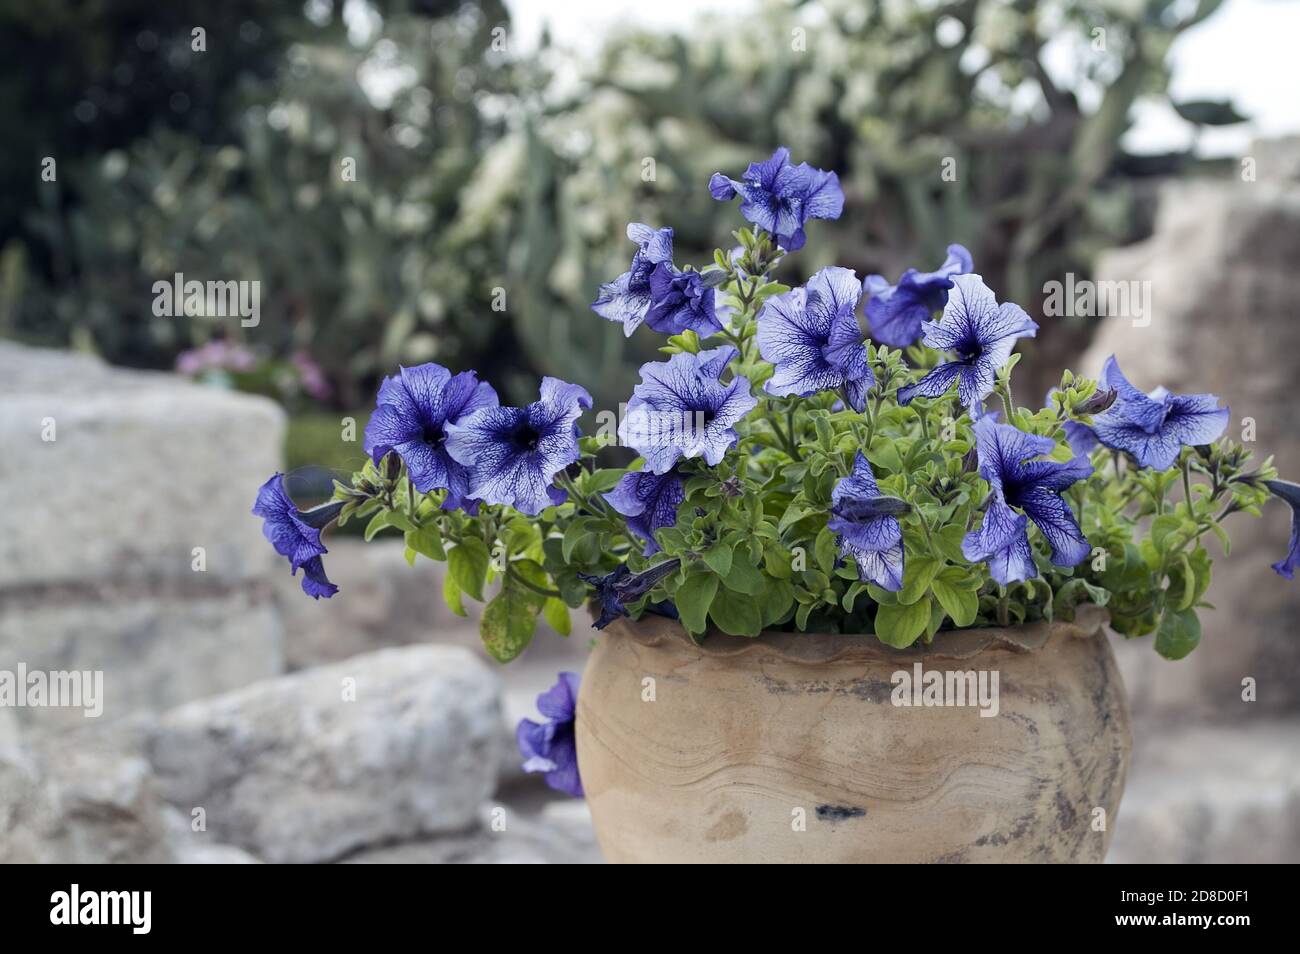 A blue petunia in a stone pot. Eine blaue Petunie in einem Steintopf. Una petunia azul en una maceta de piedra. Niebieska petunia. 在一個石罐的藍色喇叭花。 Stock Photo